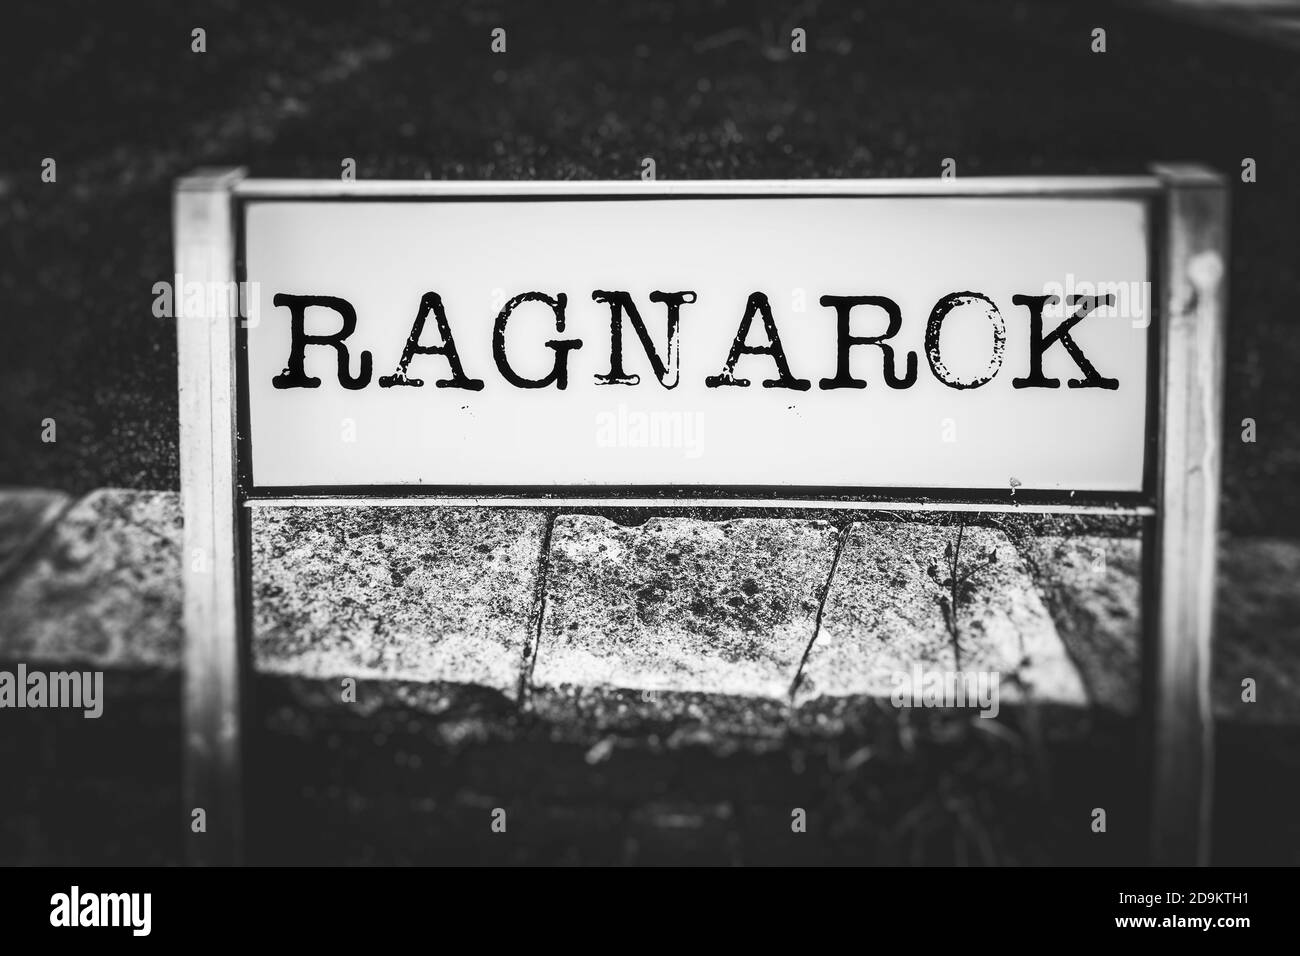 Ragnarok on a road sign Stock Photo